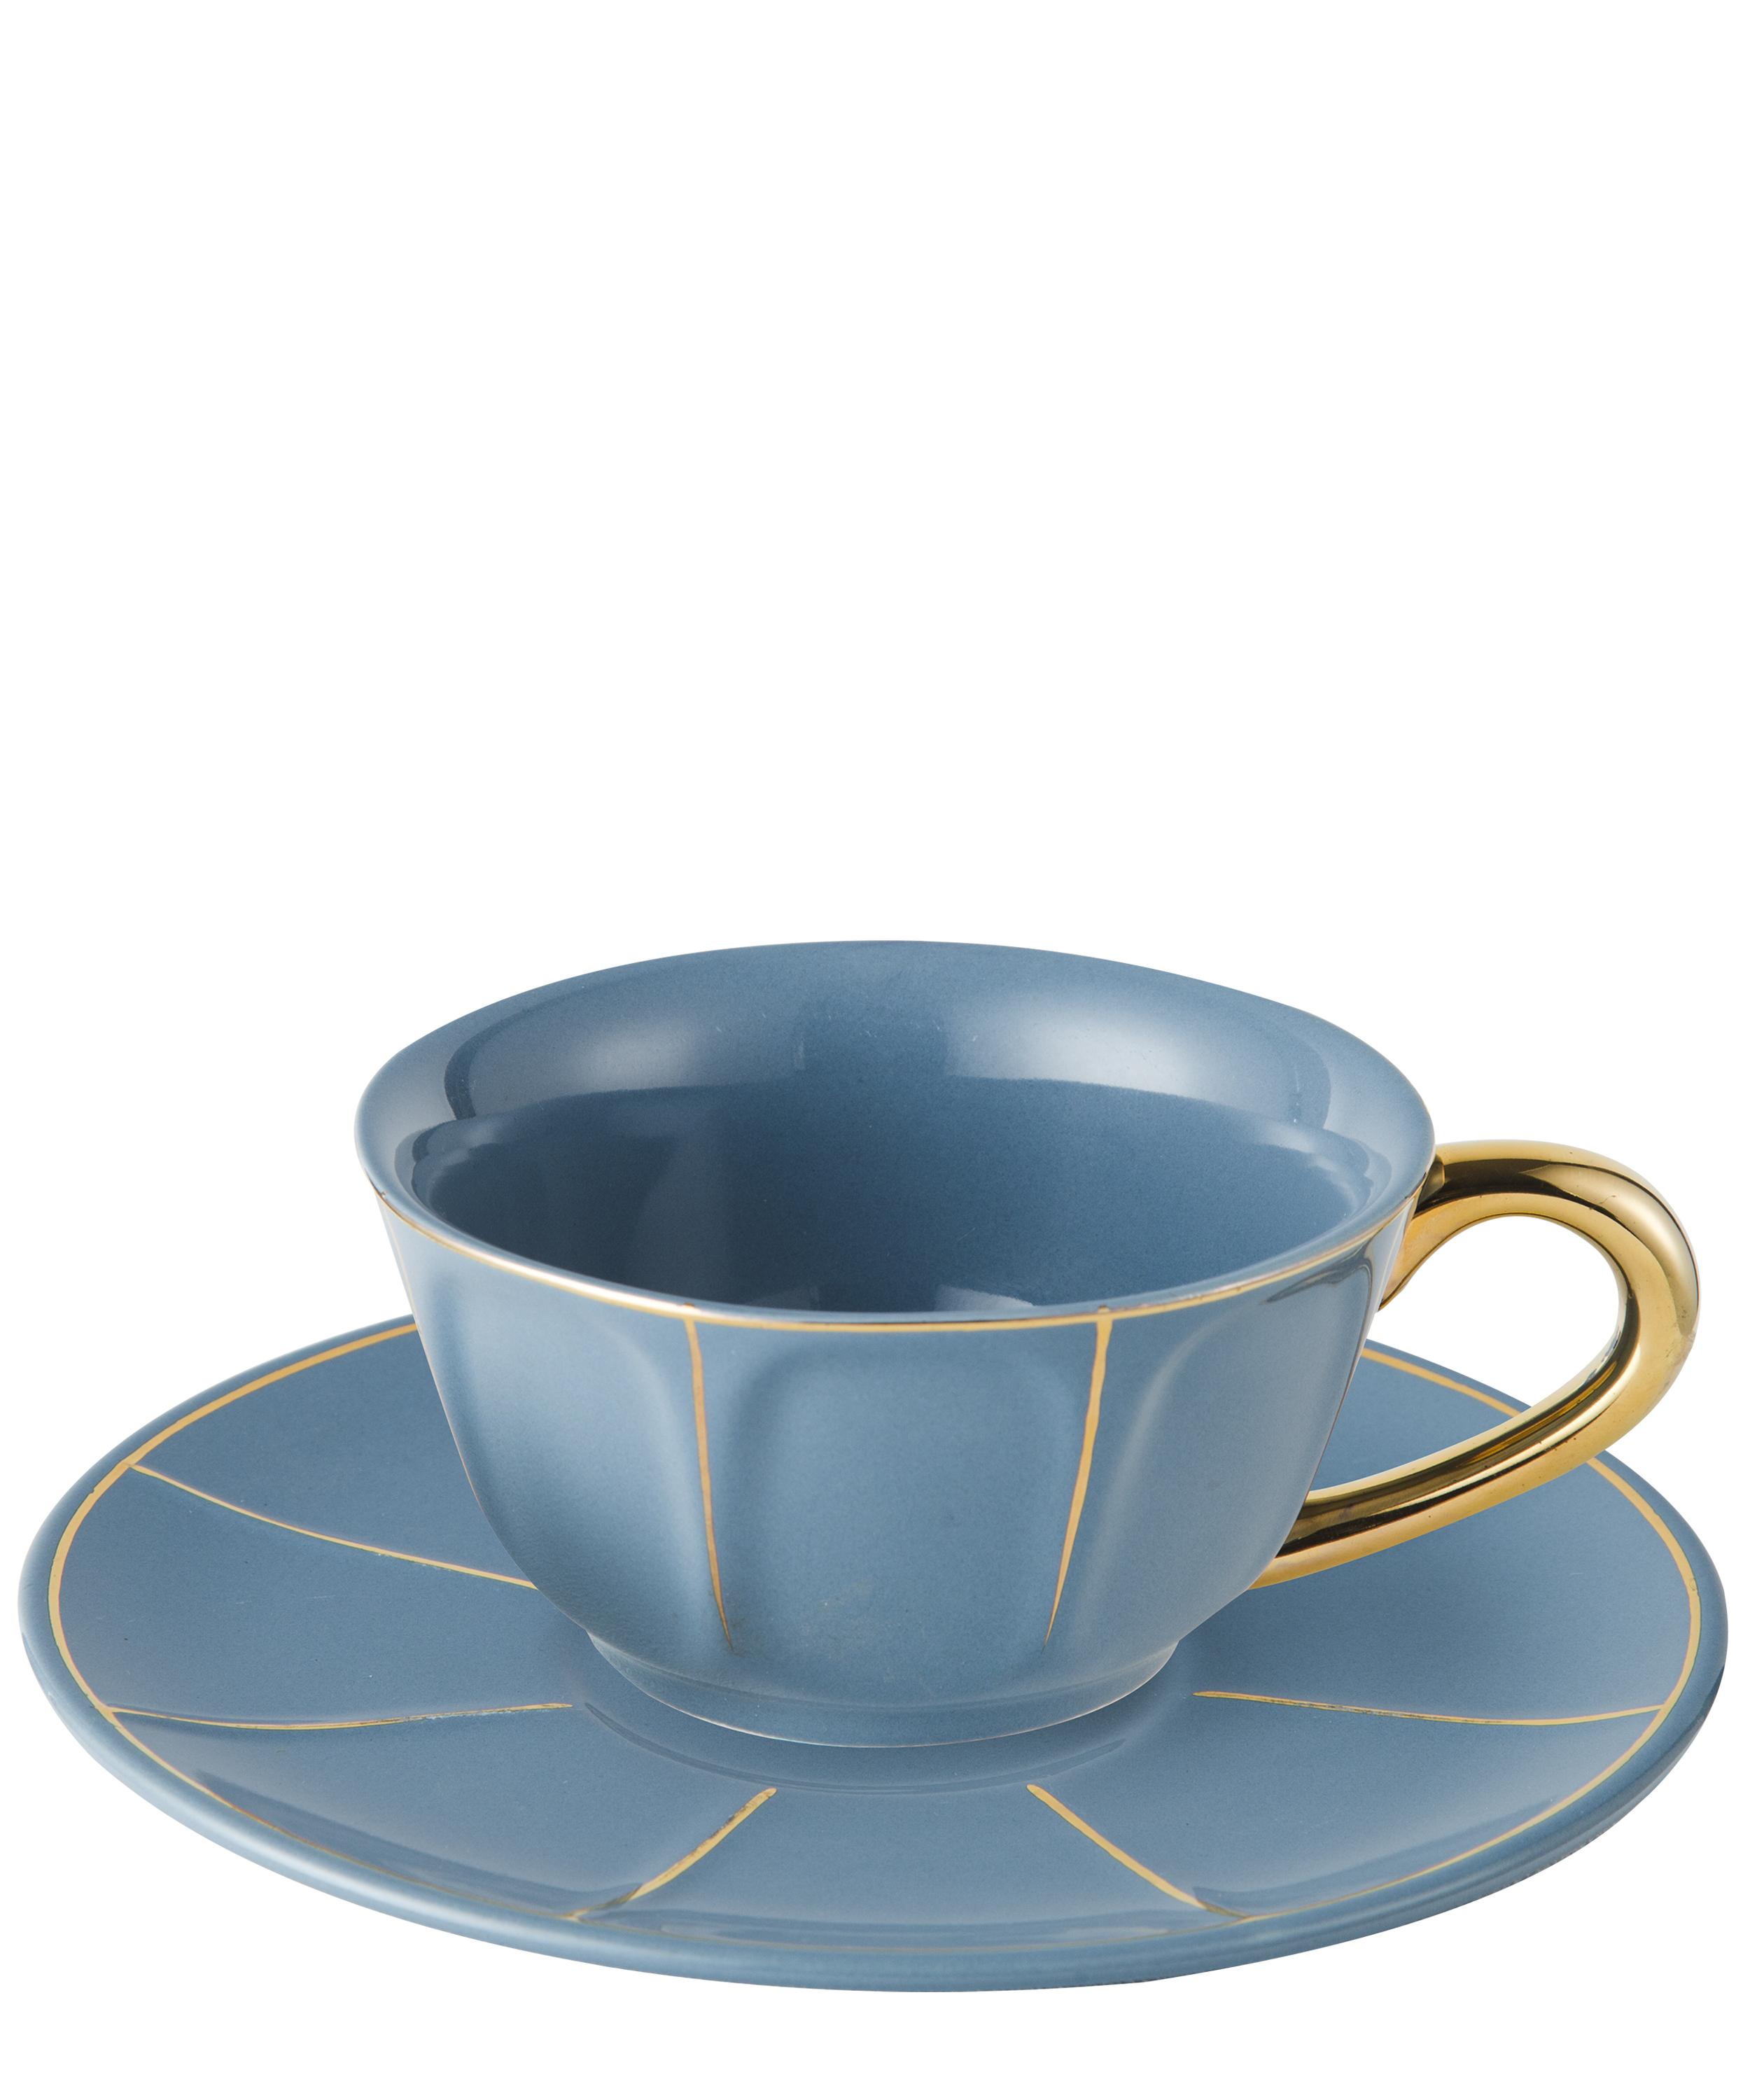 Vintage Pastel Coffee/Tea Cup